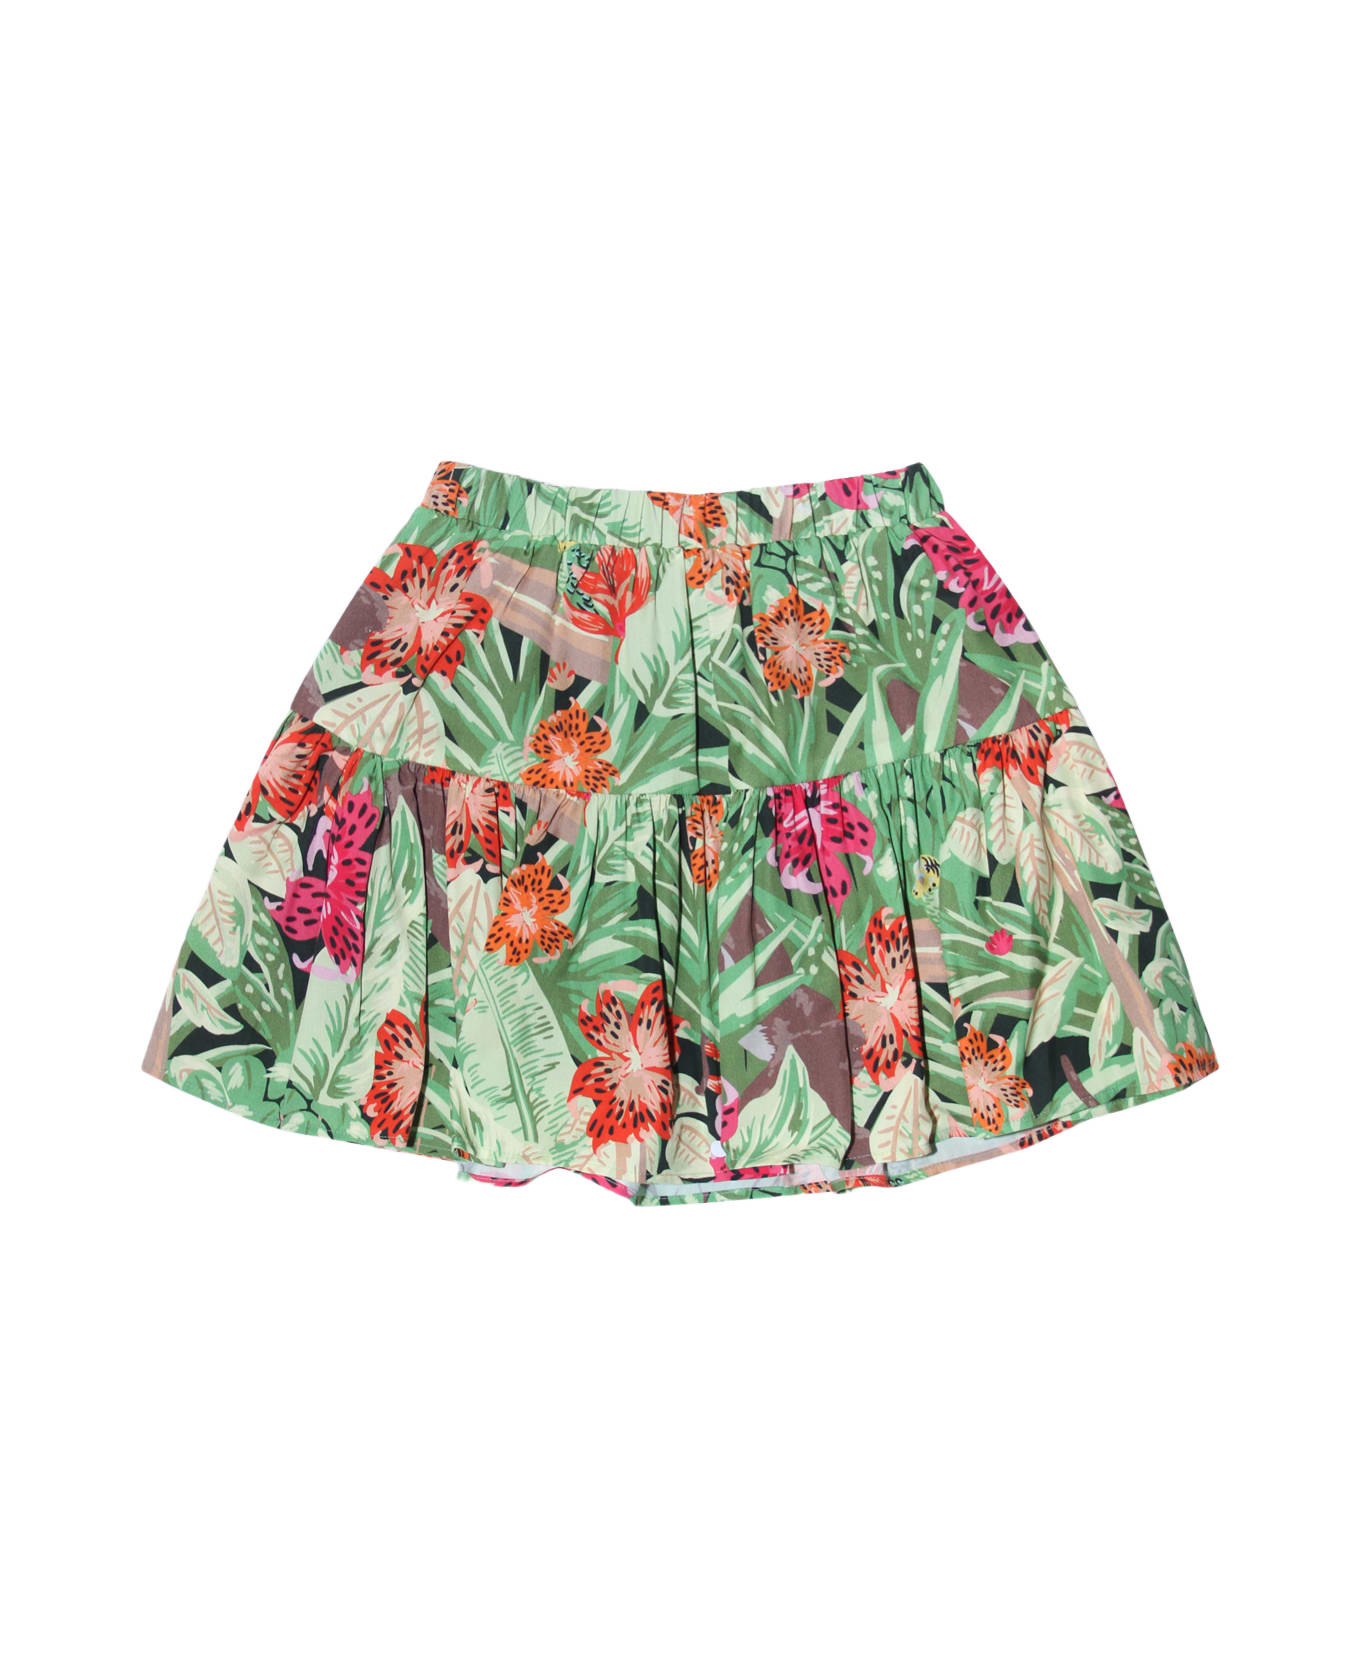 Kenzo Green Viscose Jungle Skirt - VERDE SCURO